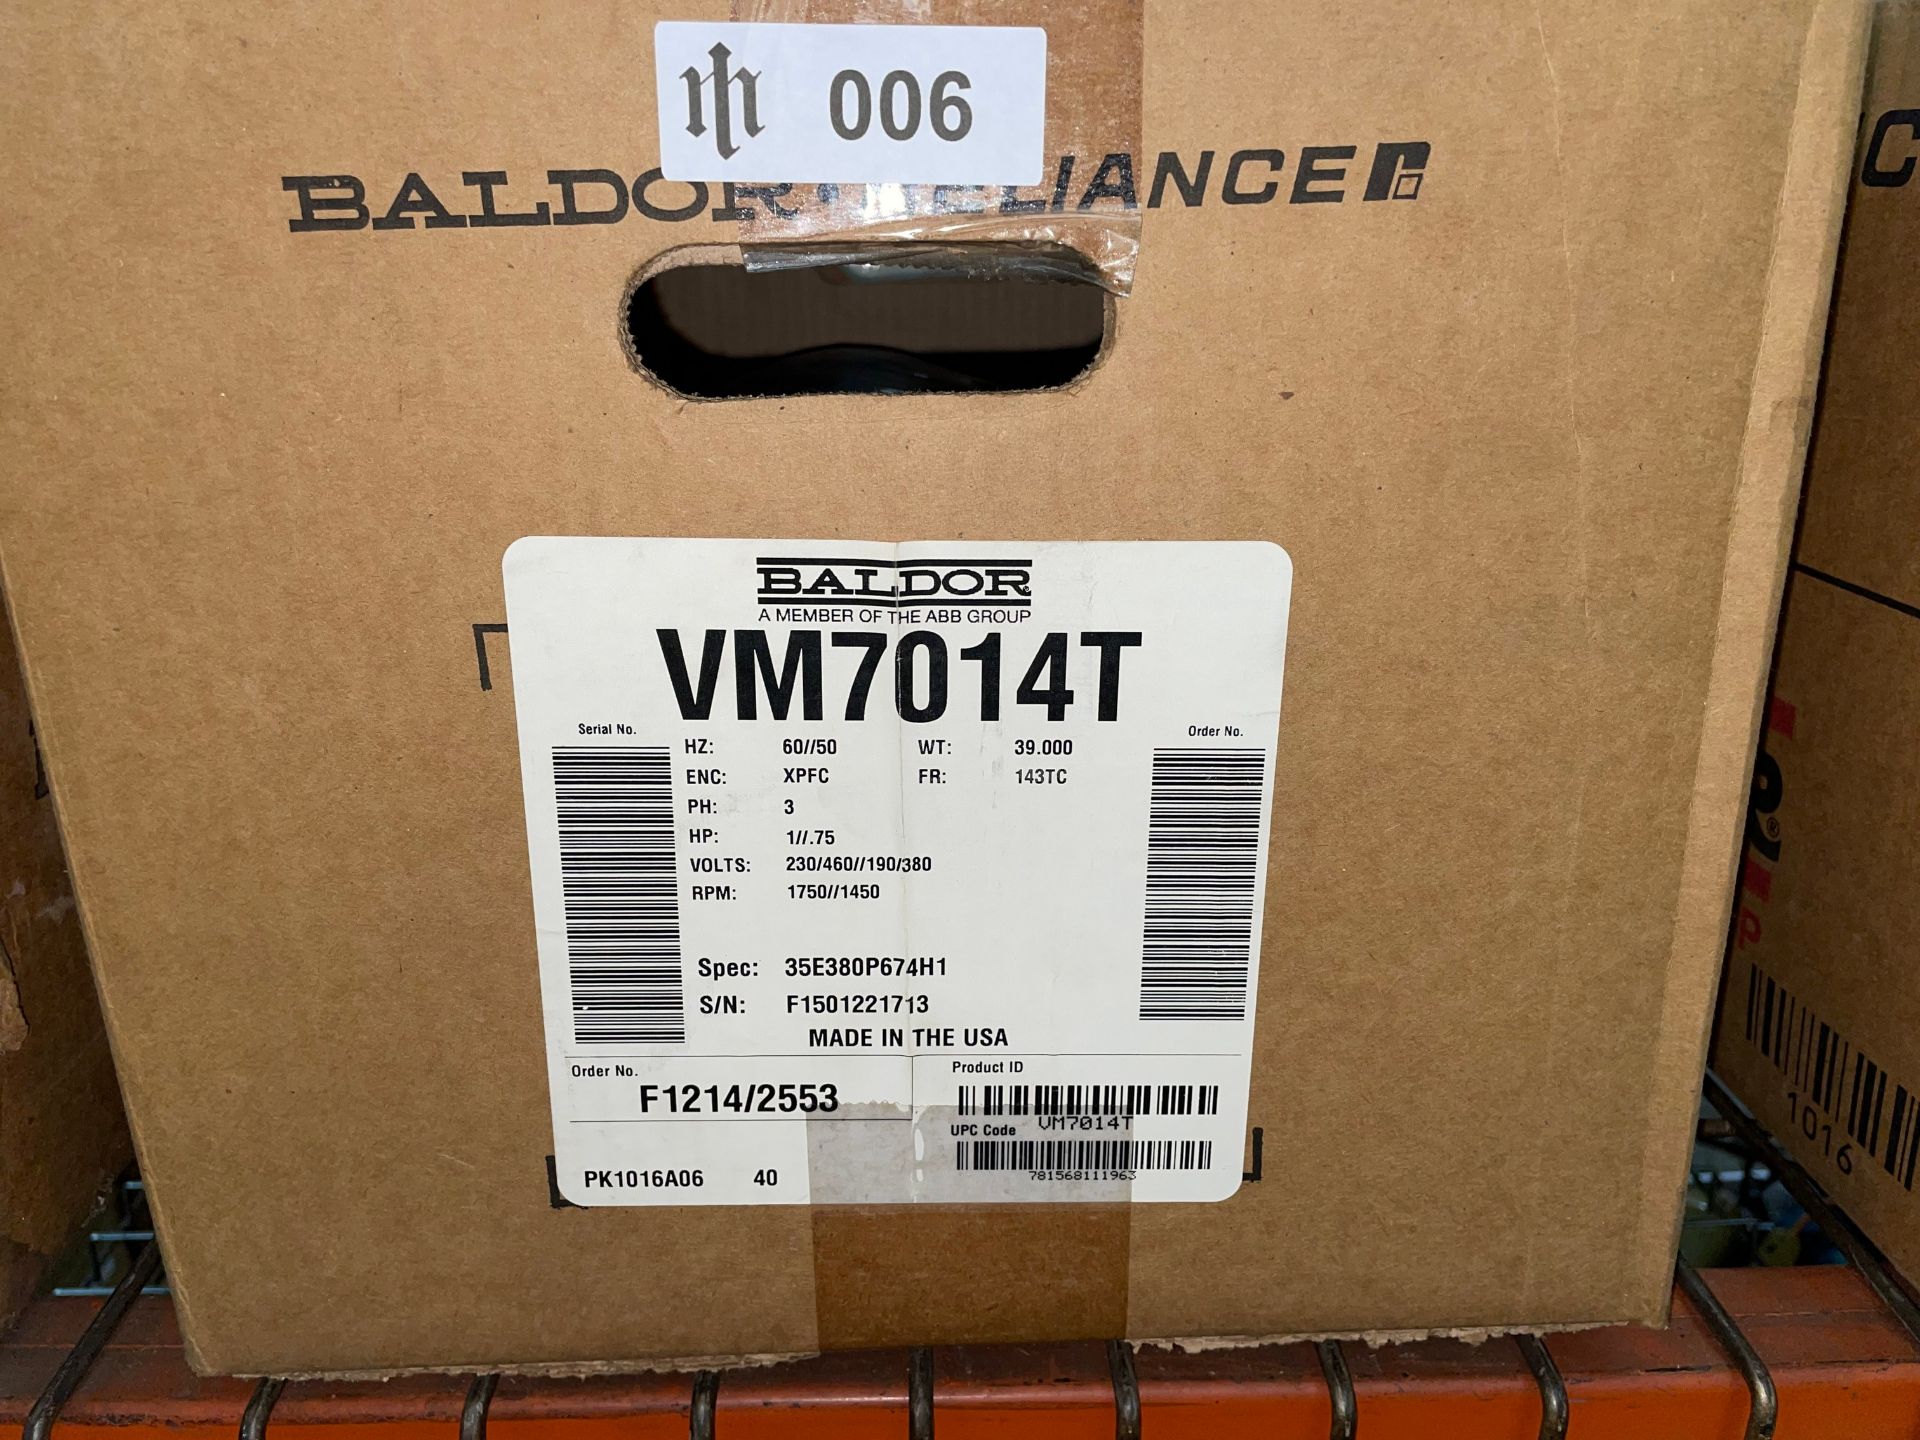 Baldor VM7014T Explosion Proof Motor, 1HP - Image 3 of 3